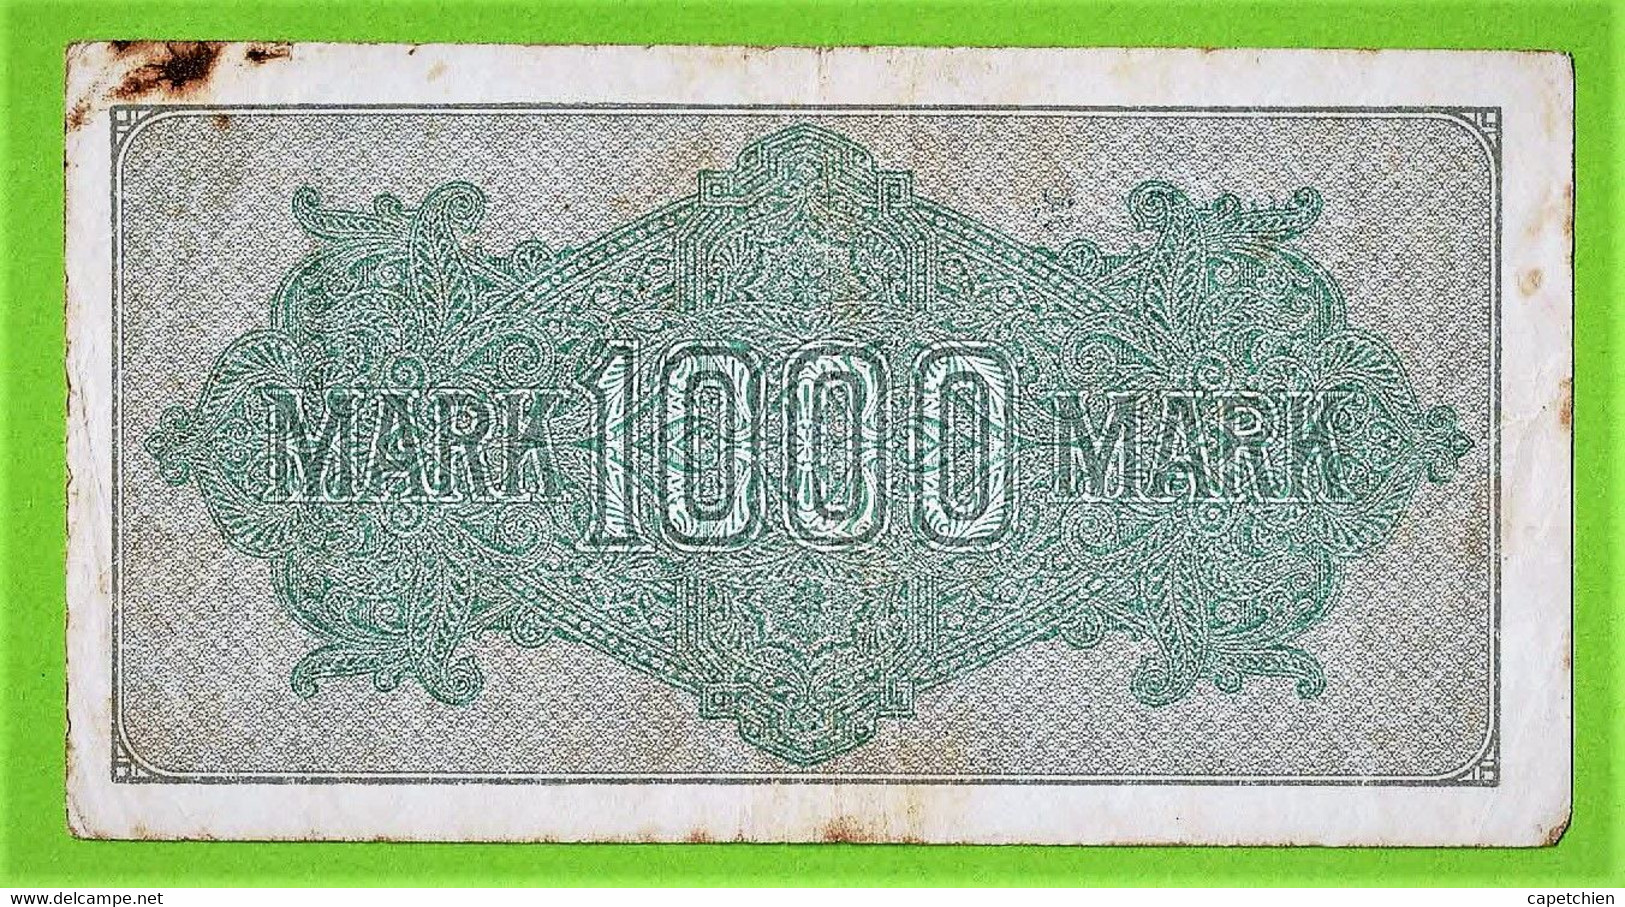 ALLEMAGNE / 1000 MARK / SEPTEMBRE 1922  / SERIE VL / N° VERT / Jd 220872 * - 1000 Mark